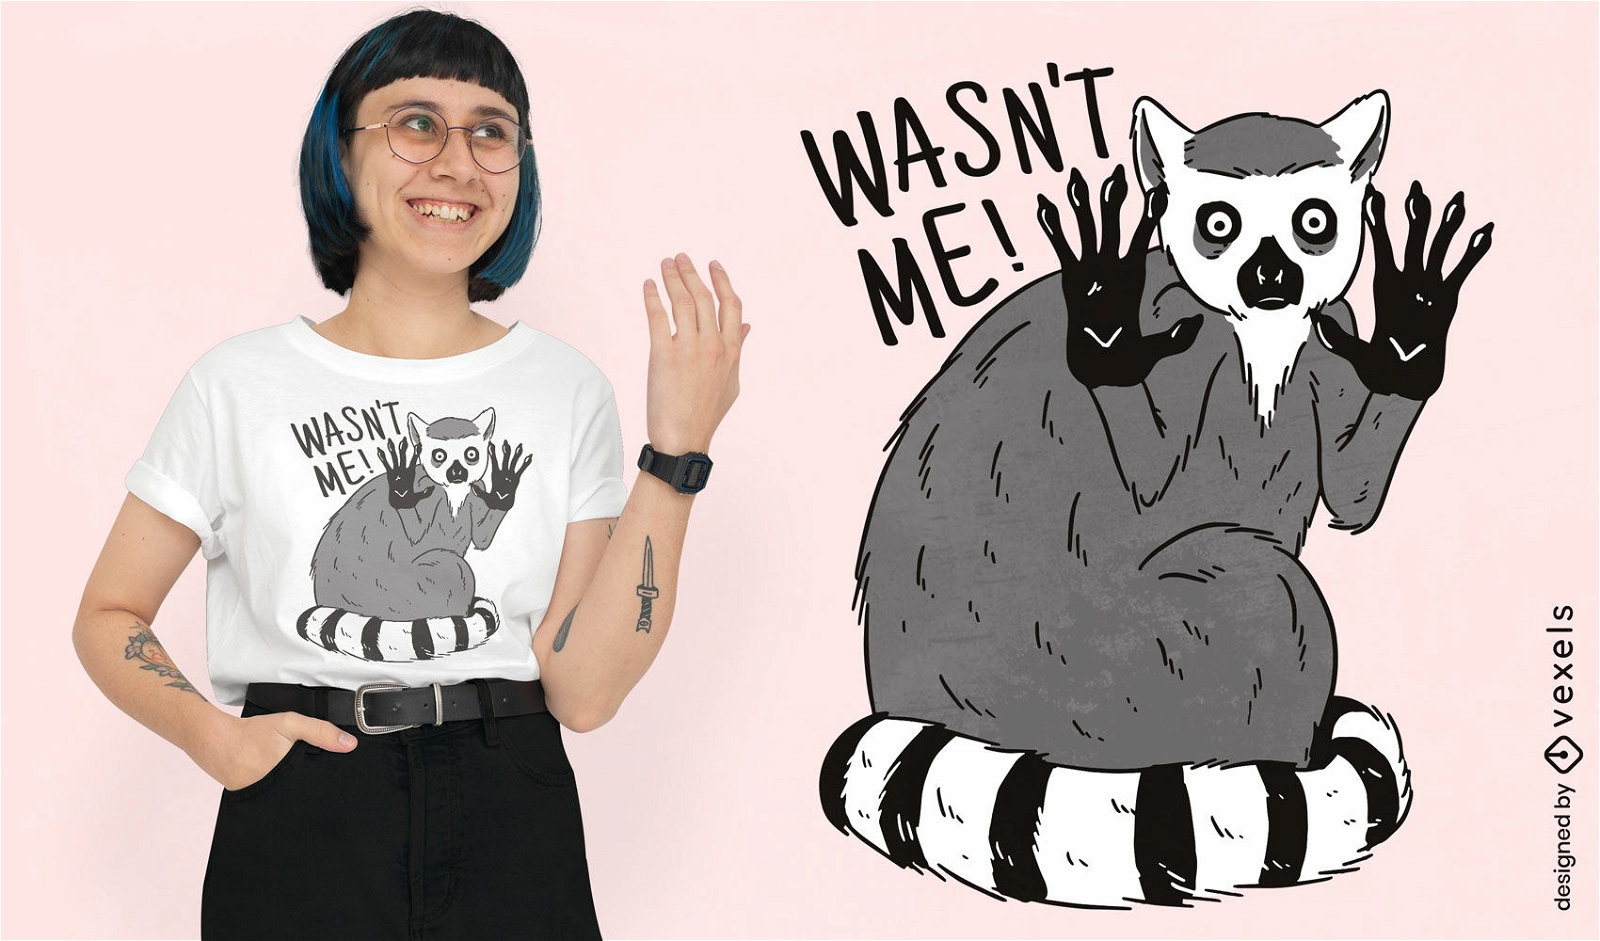 Wasn't me lemur t-shirt design